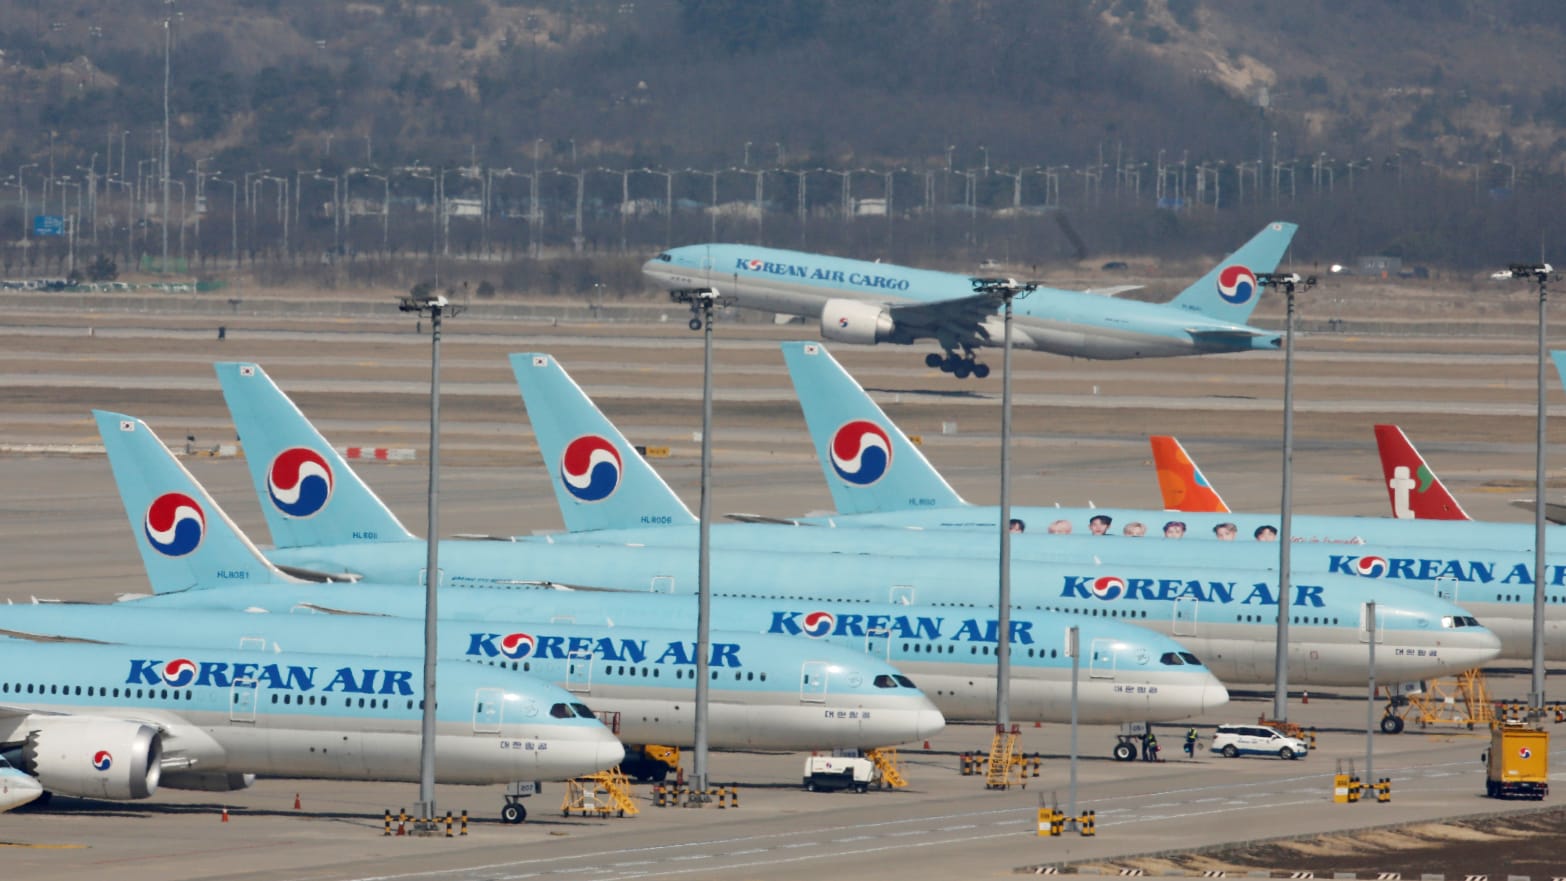 A Korean Air jet hit a Cathay Pacific aircraft at an airport in Japan. 